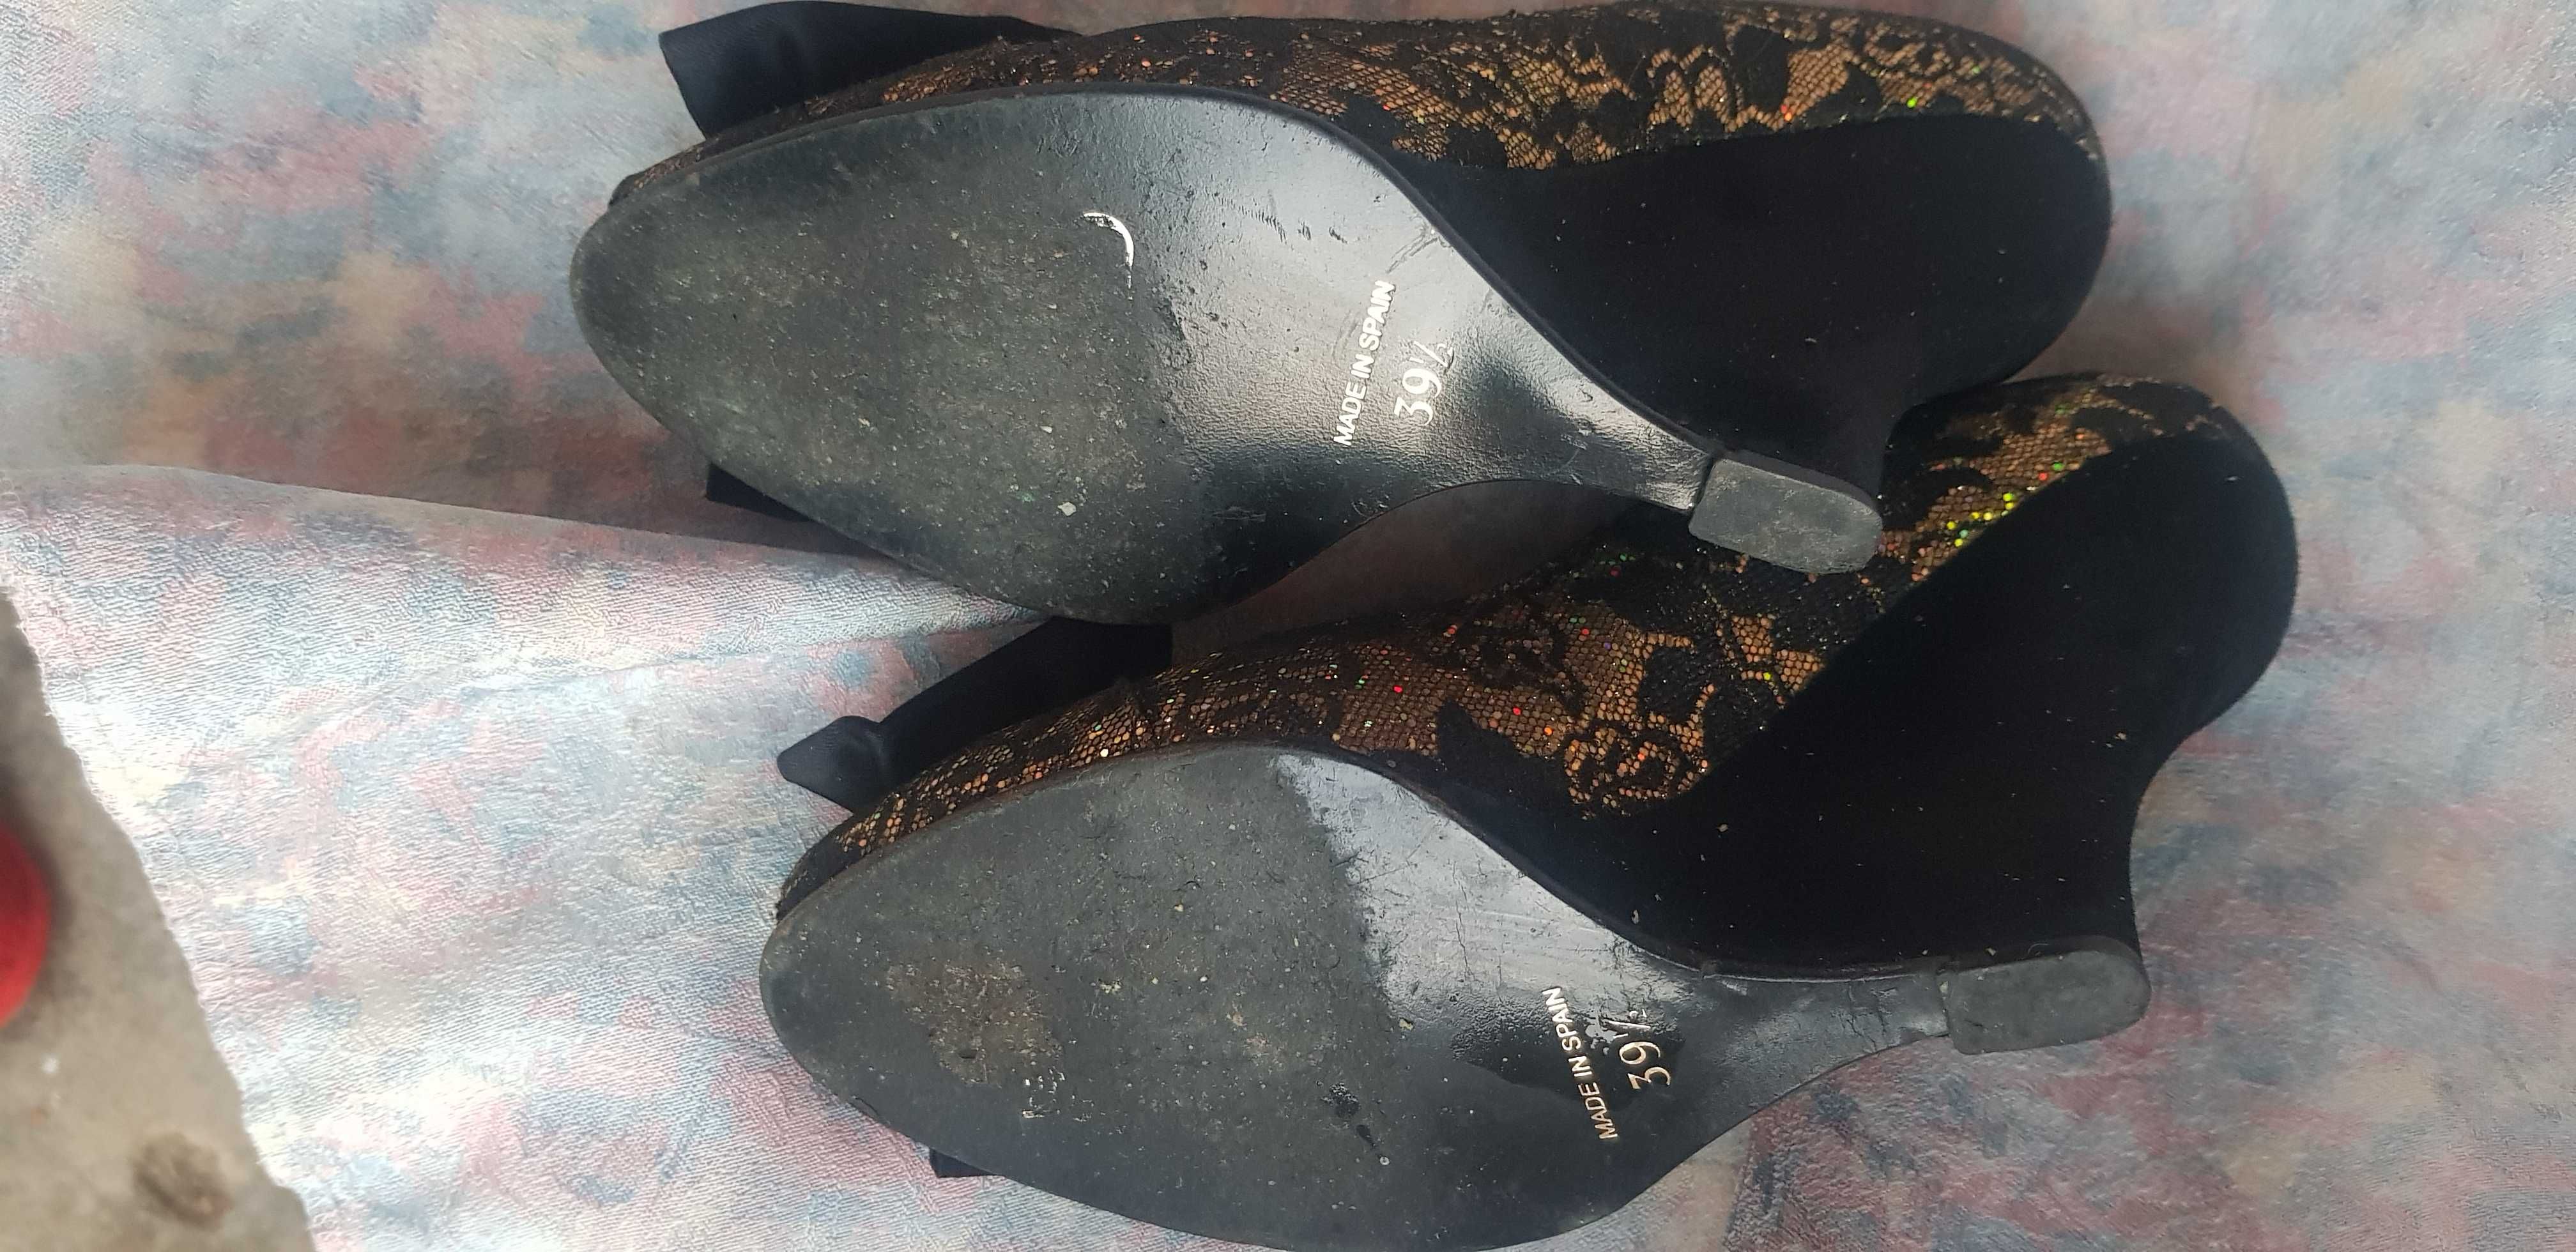 pantofi cu plasa neagra pe fond auriu